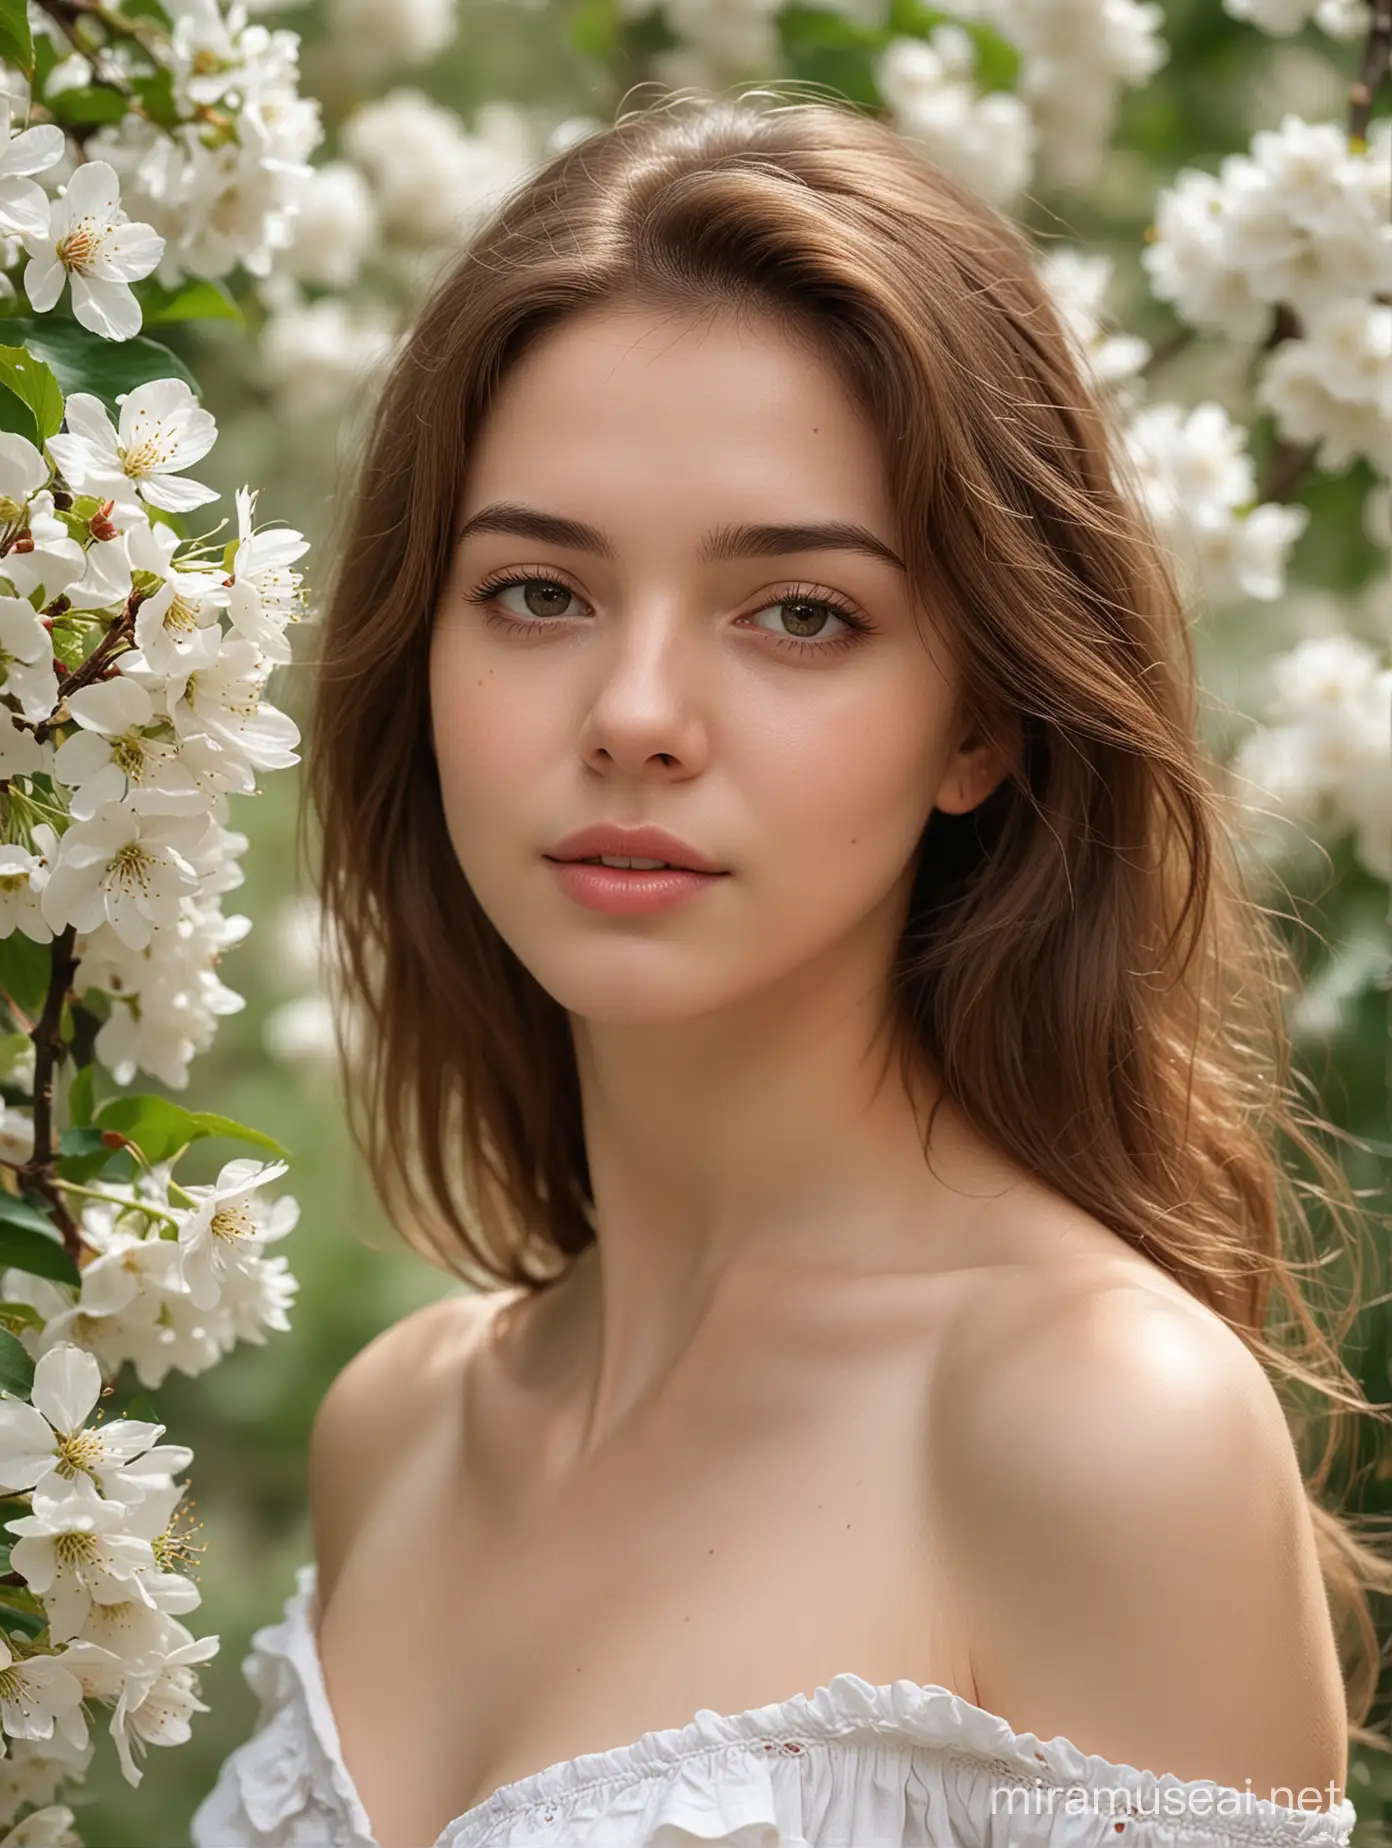 adult girl,( exstrem detailed face,detailed skin) old 18 year full body Nude, graceful girl,cherry bloom,Flower garden,outdoor.